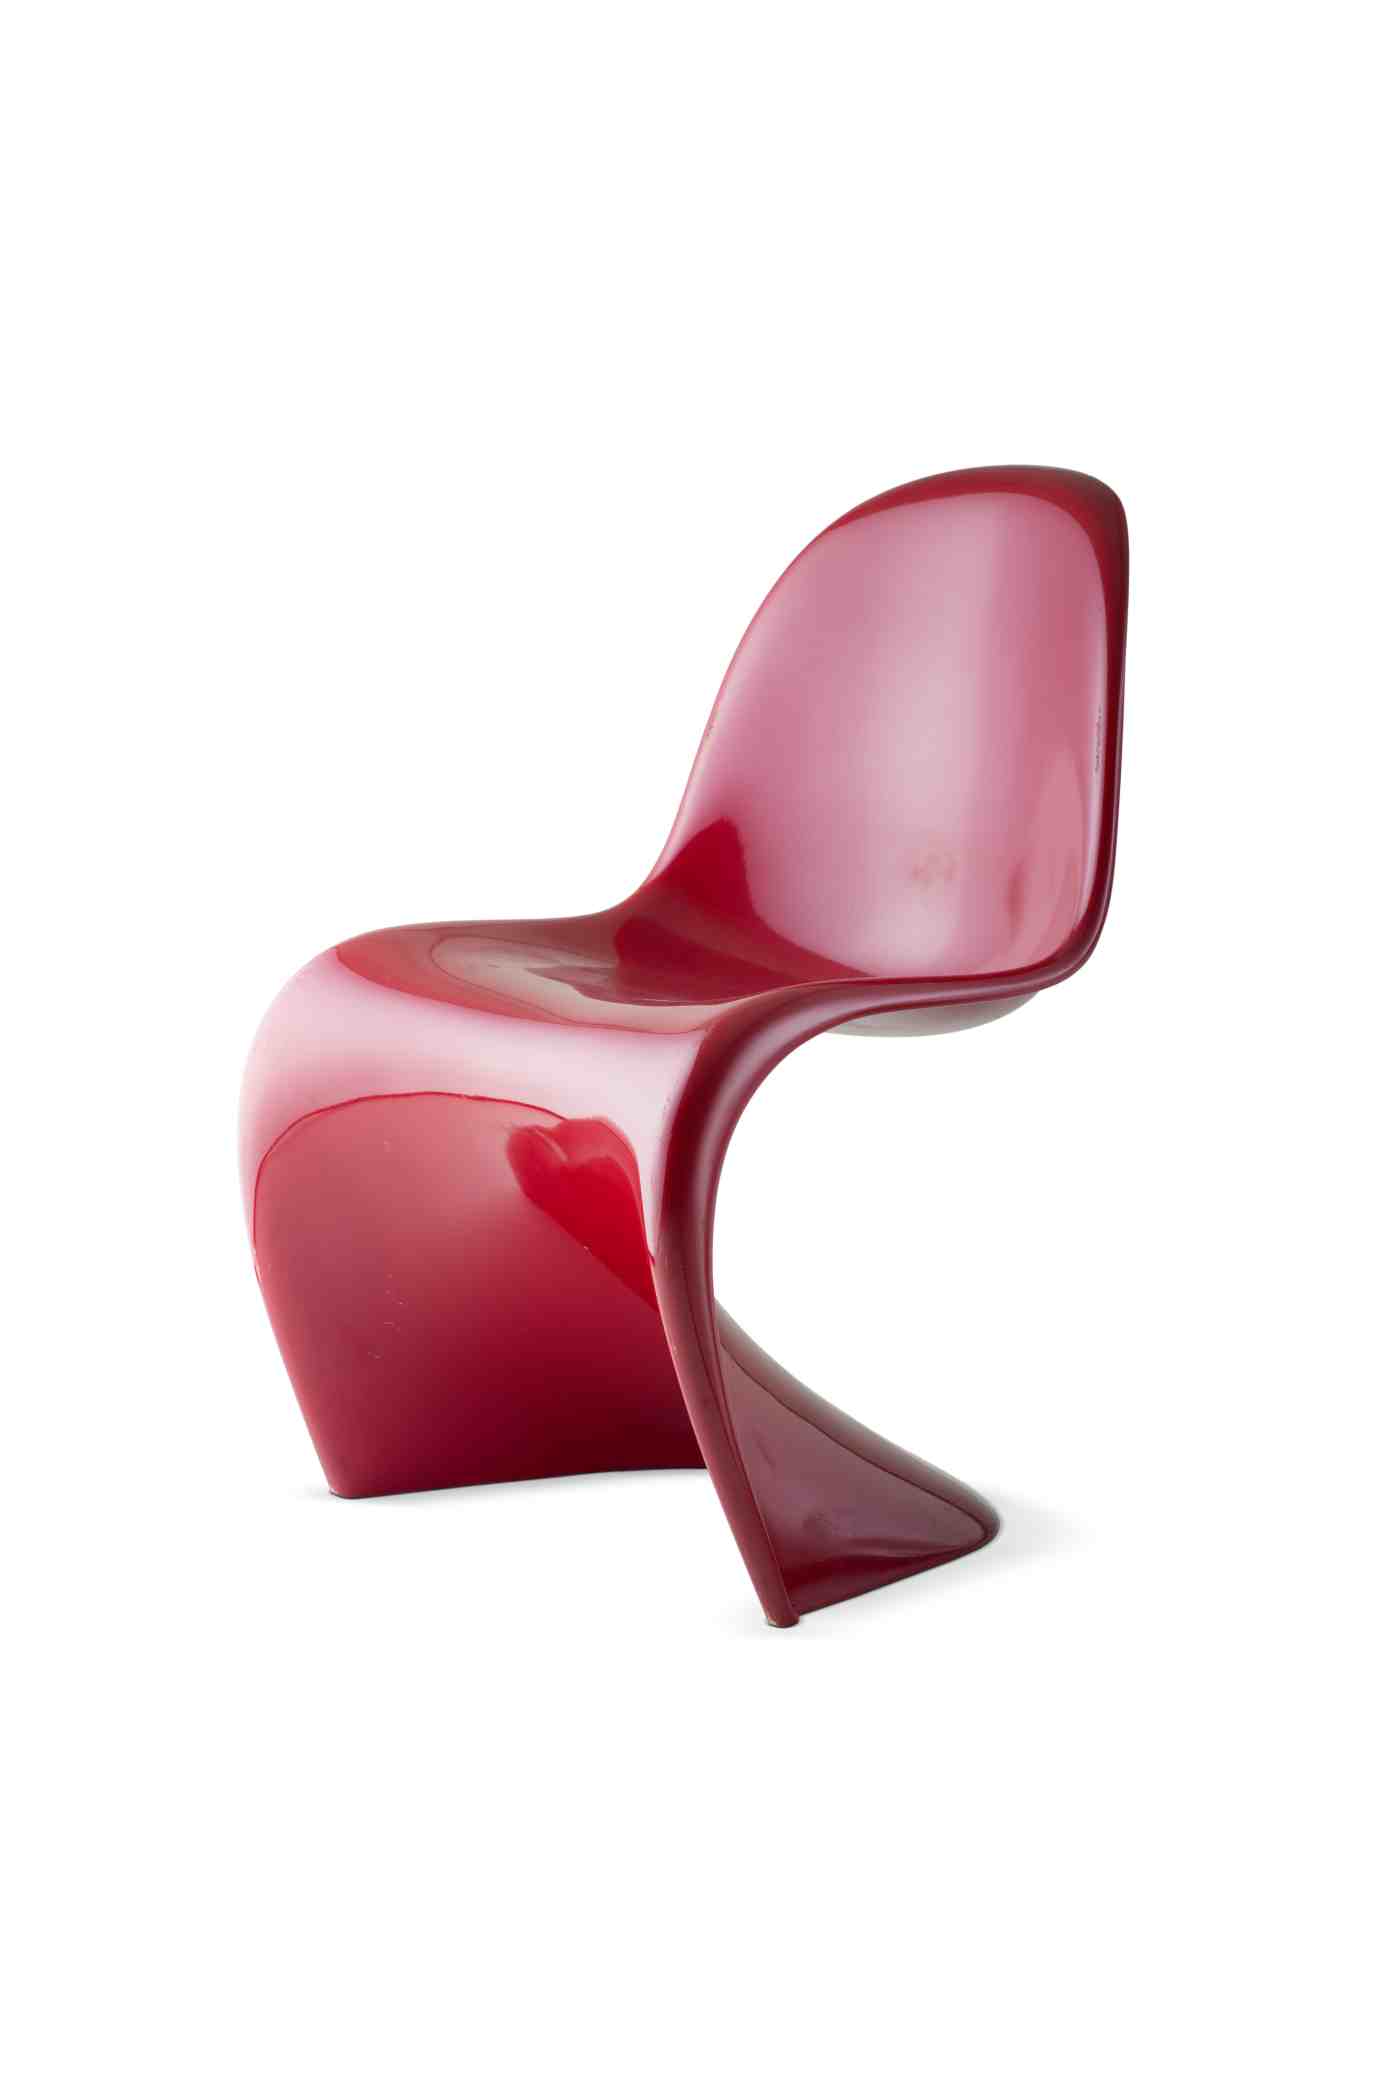 Einfach und genial: Verner Pantons «Panton Chair»